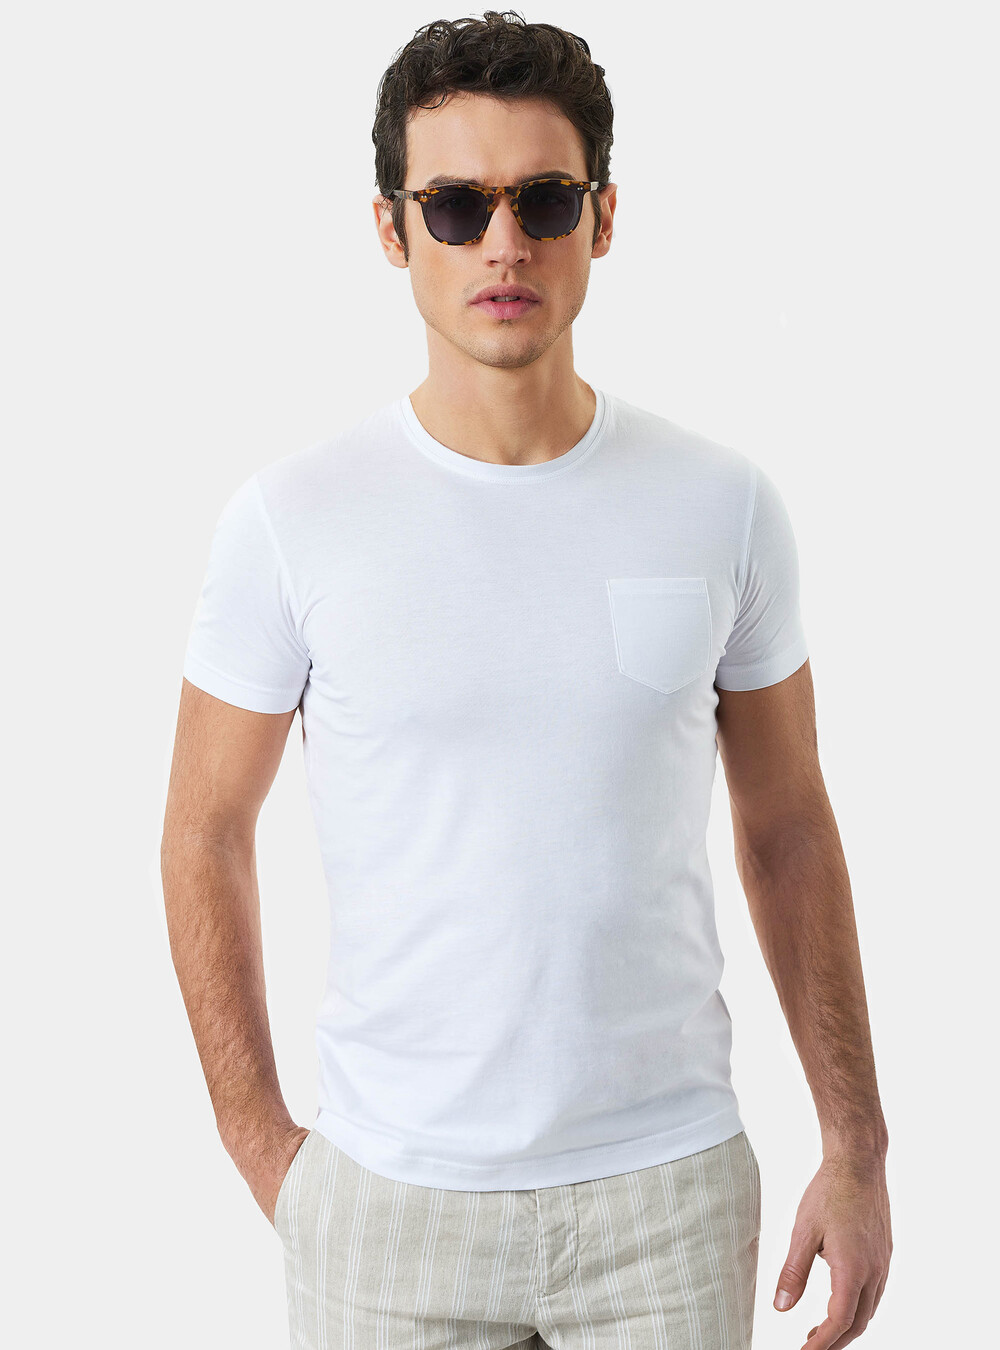 Supima cotton jersey t-shirt with pocket | GutteridgeUS | Men's Clothing